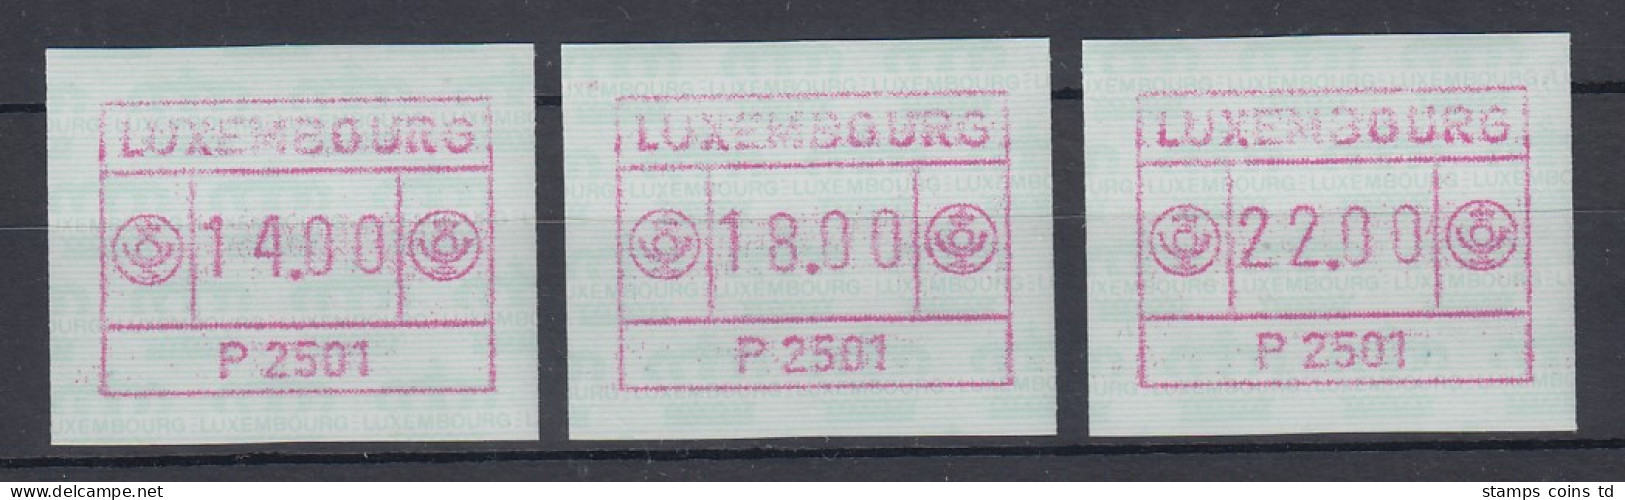 Luxemburg ATM P2501 Rotlila Tastensatz 14-18-22 **   - Postage Labels